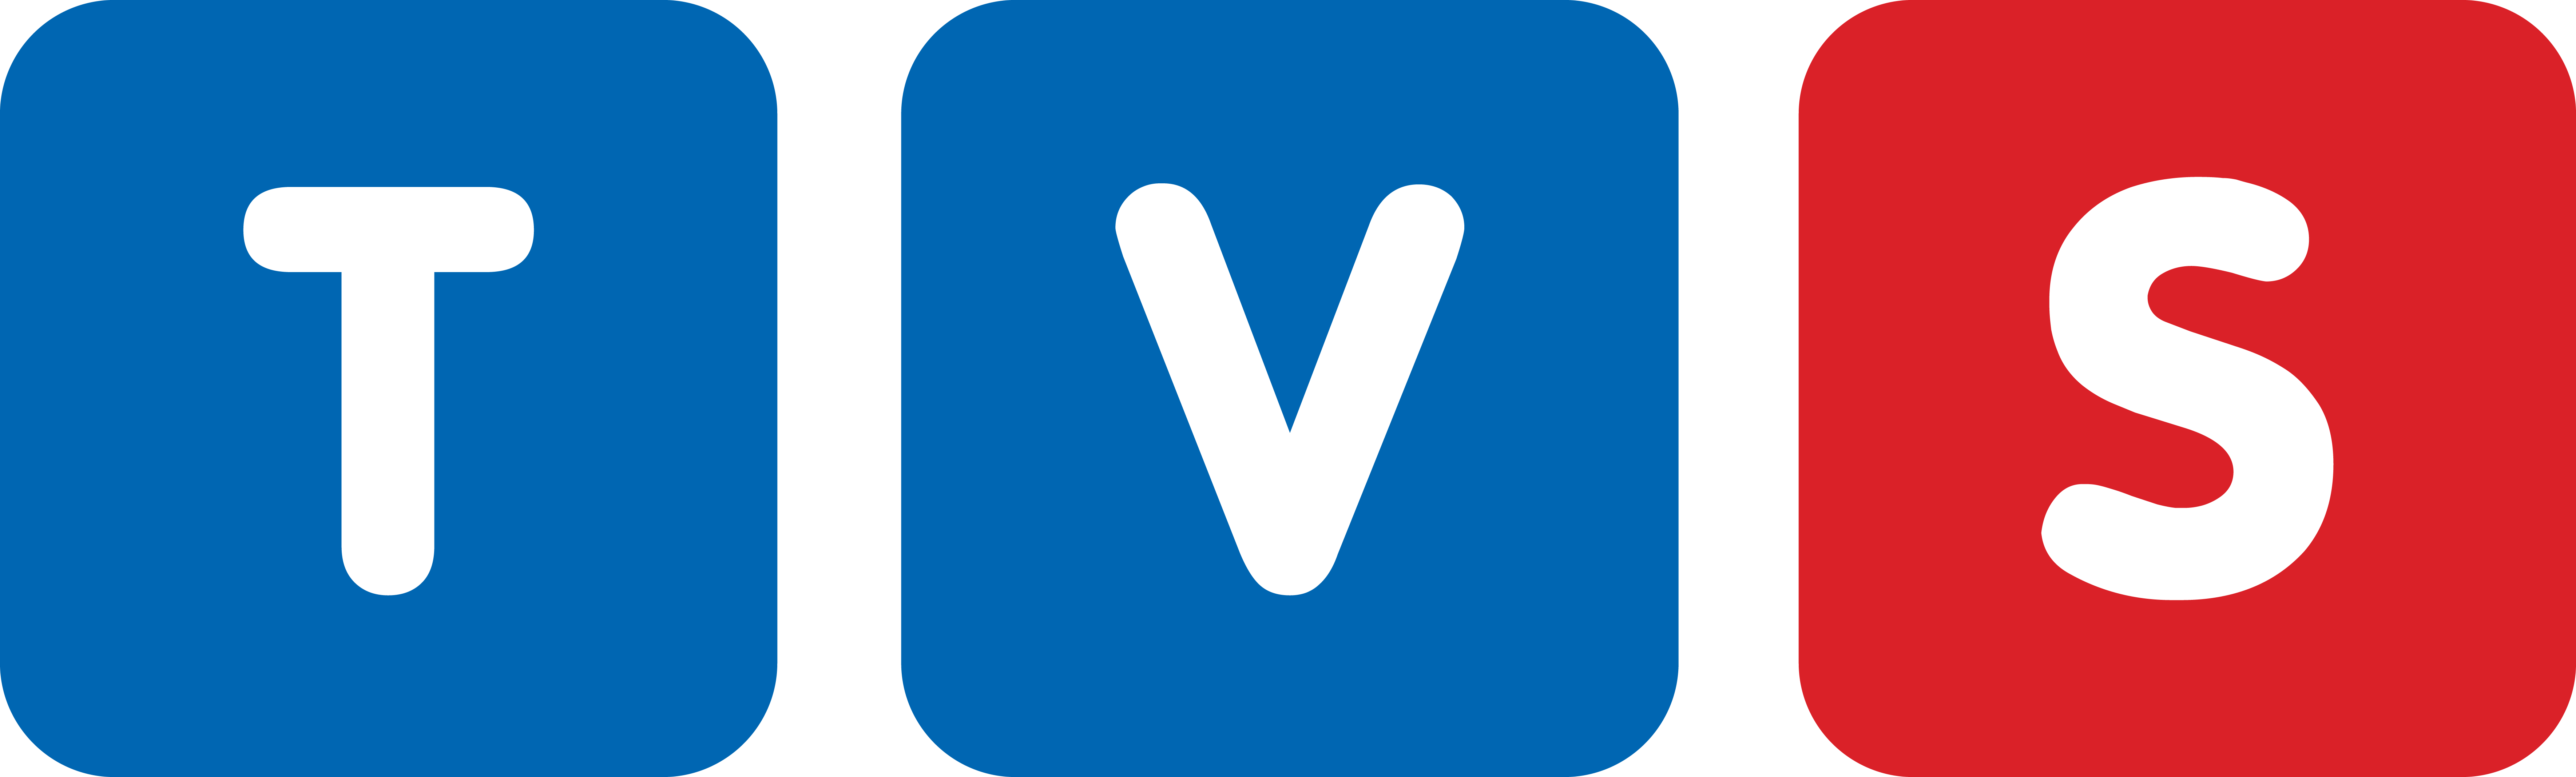 Media i logo  TVS.pl